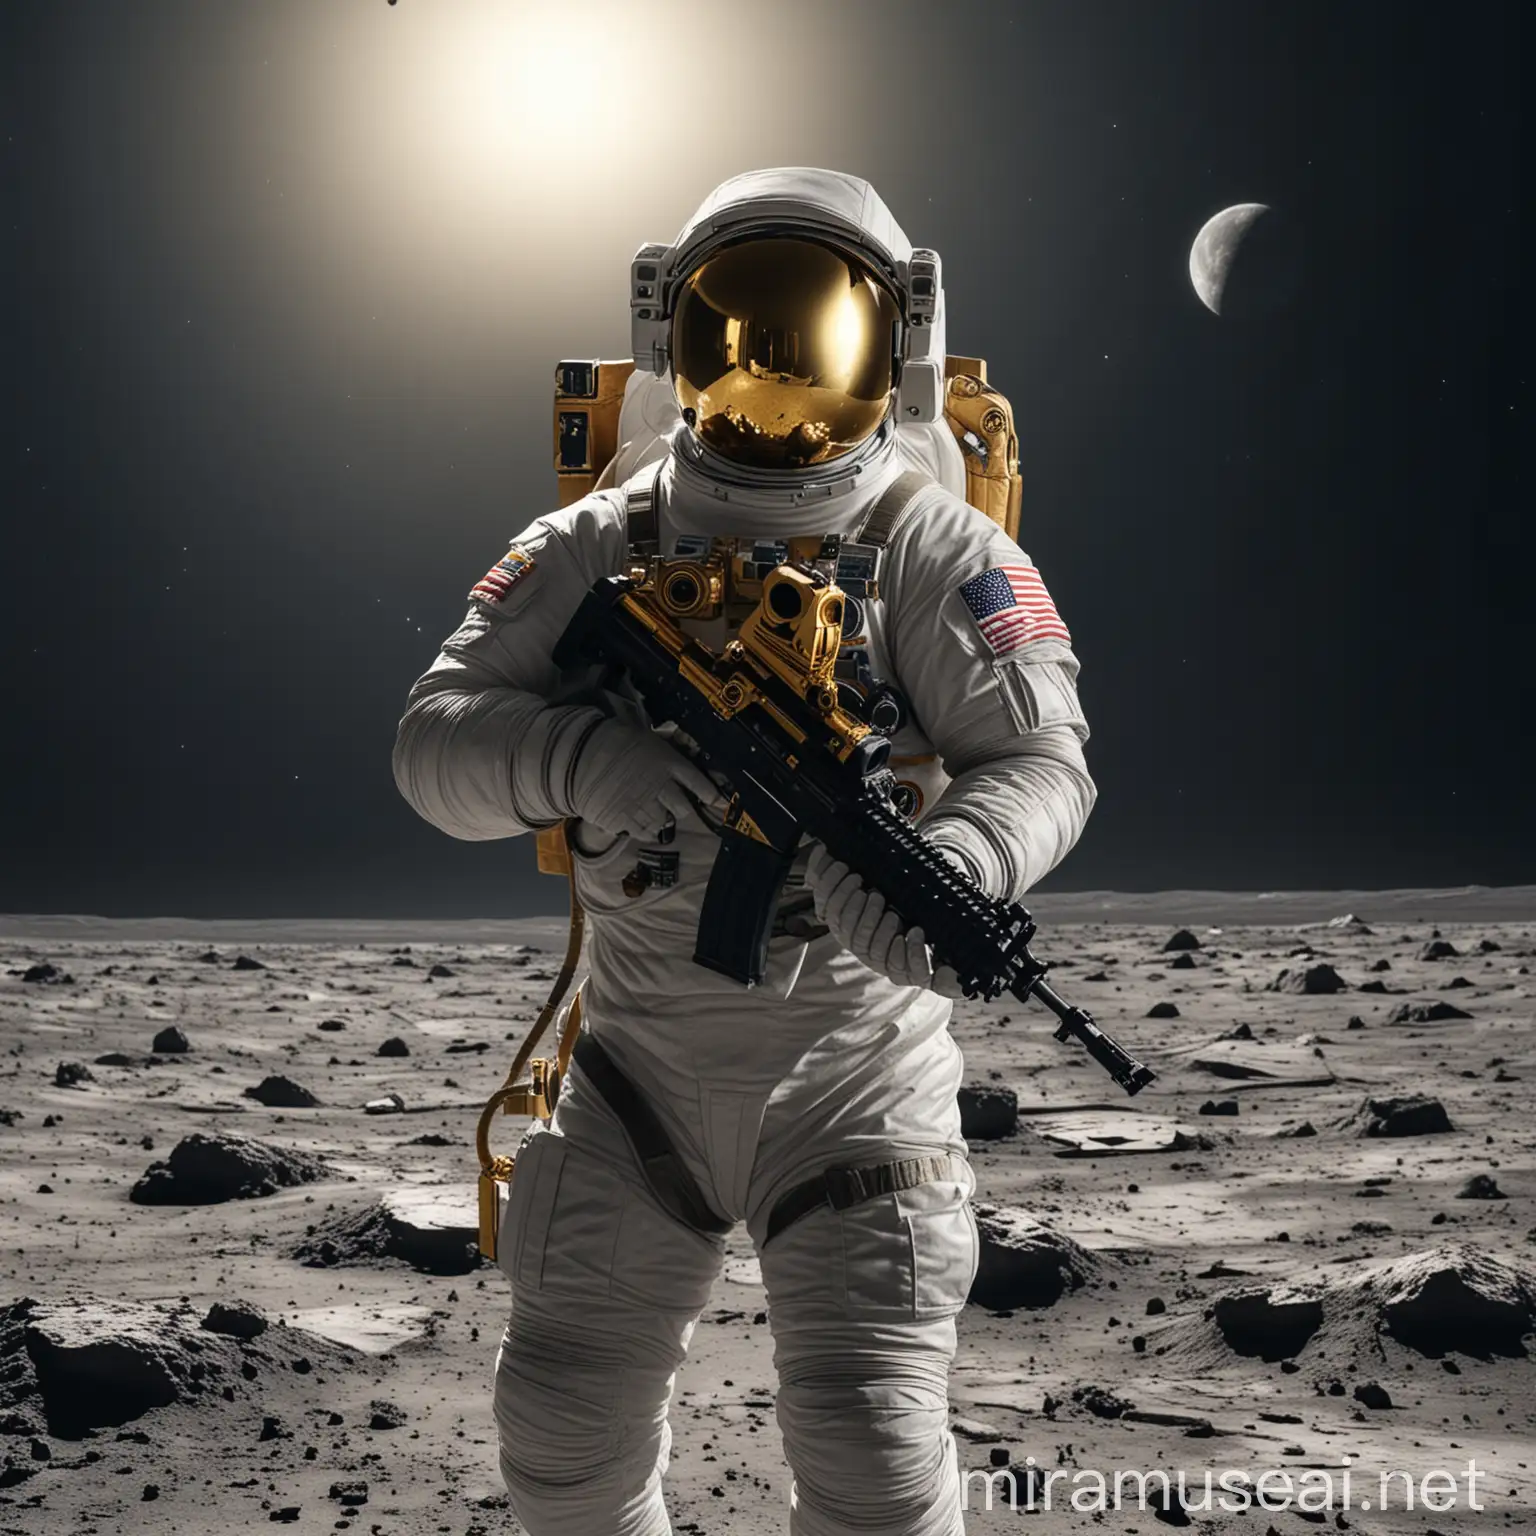 NASA Astronaut with Golden Visor and Assault Rifle on Moon Surface